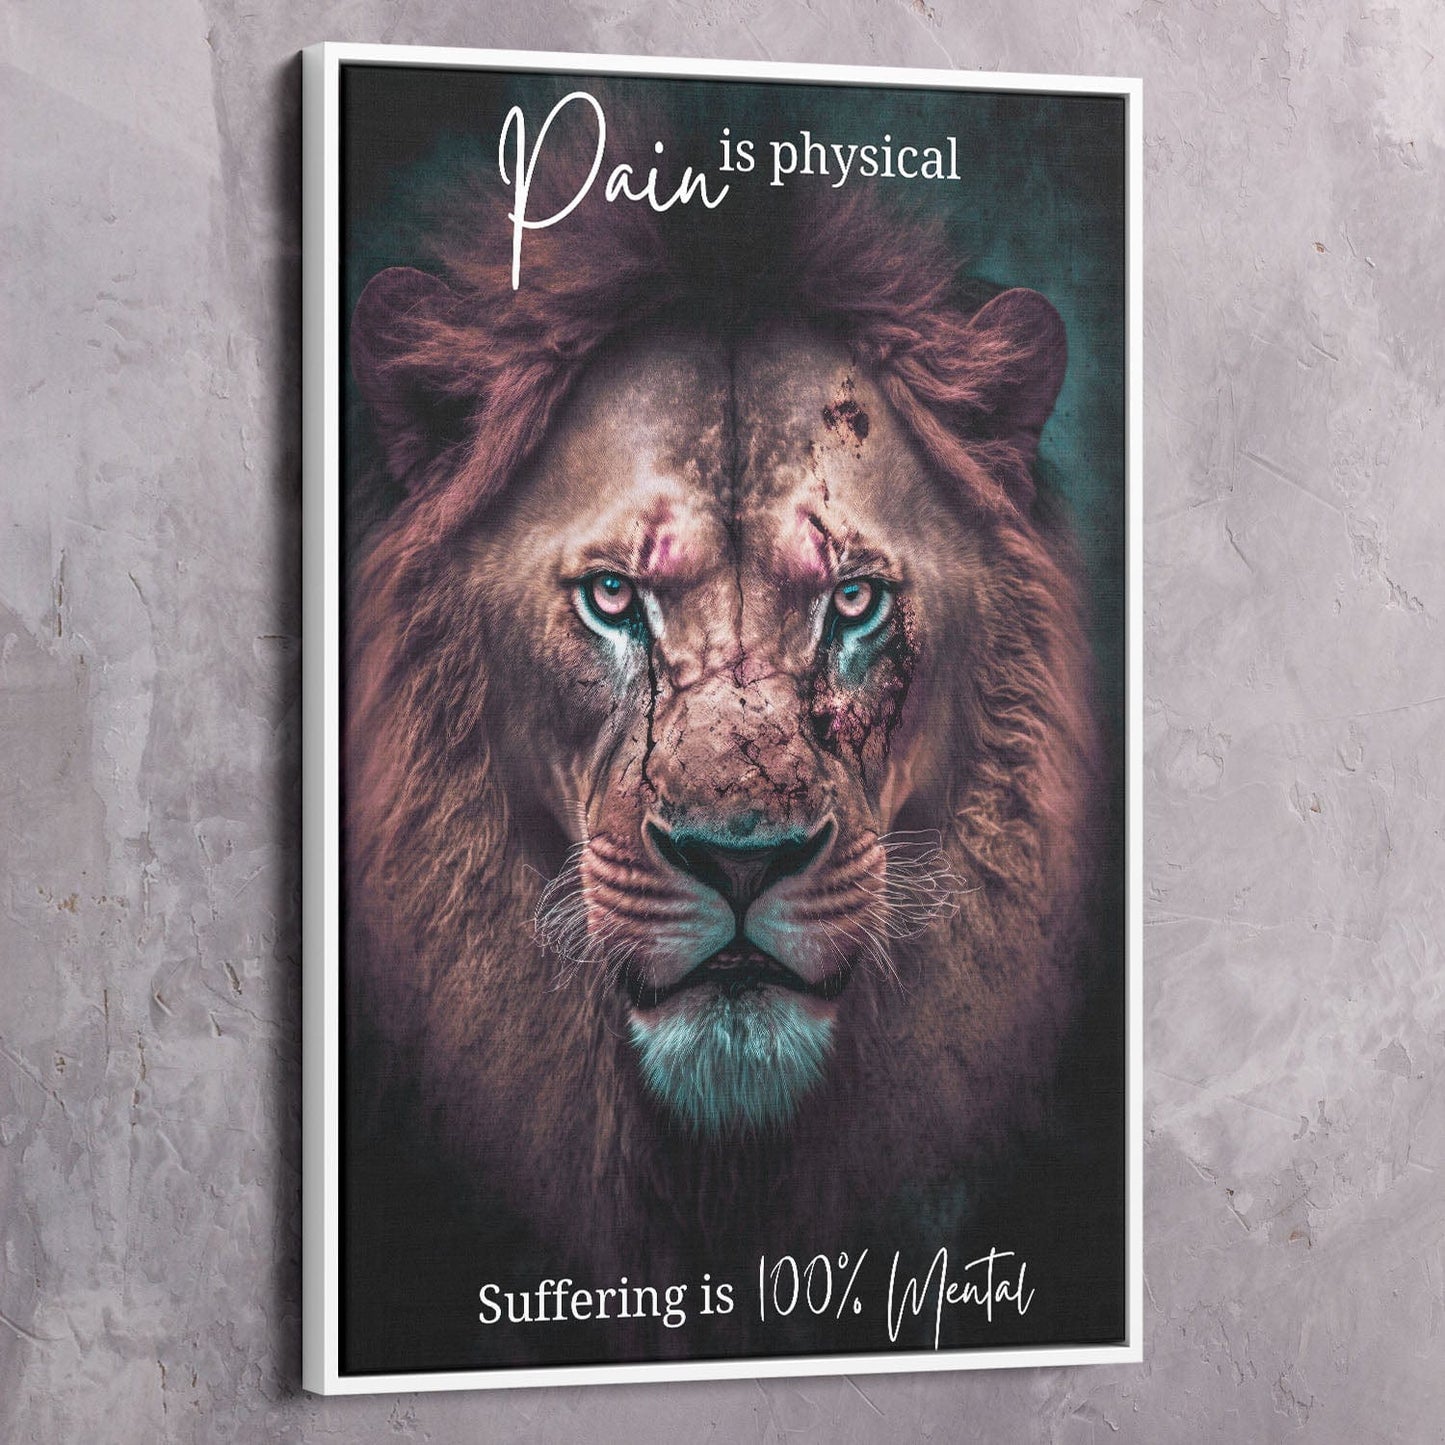 Lion Scars - Pain is physical suffering is 100% mental - Nisargadatta Maharaj Quote Wall Art | Inspirational Wall Art Motivational Wall Art Quotes Office Art | ImpaktMaker Exclusive Canvas Art Portrait